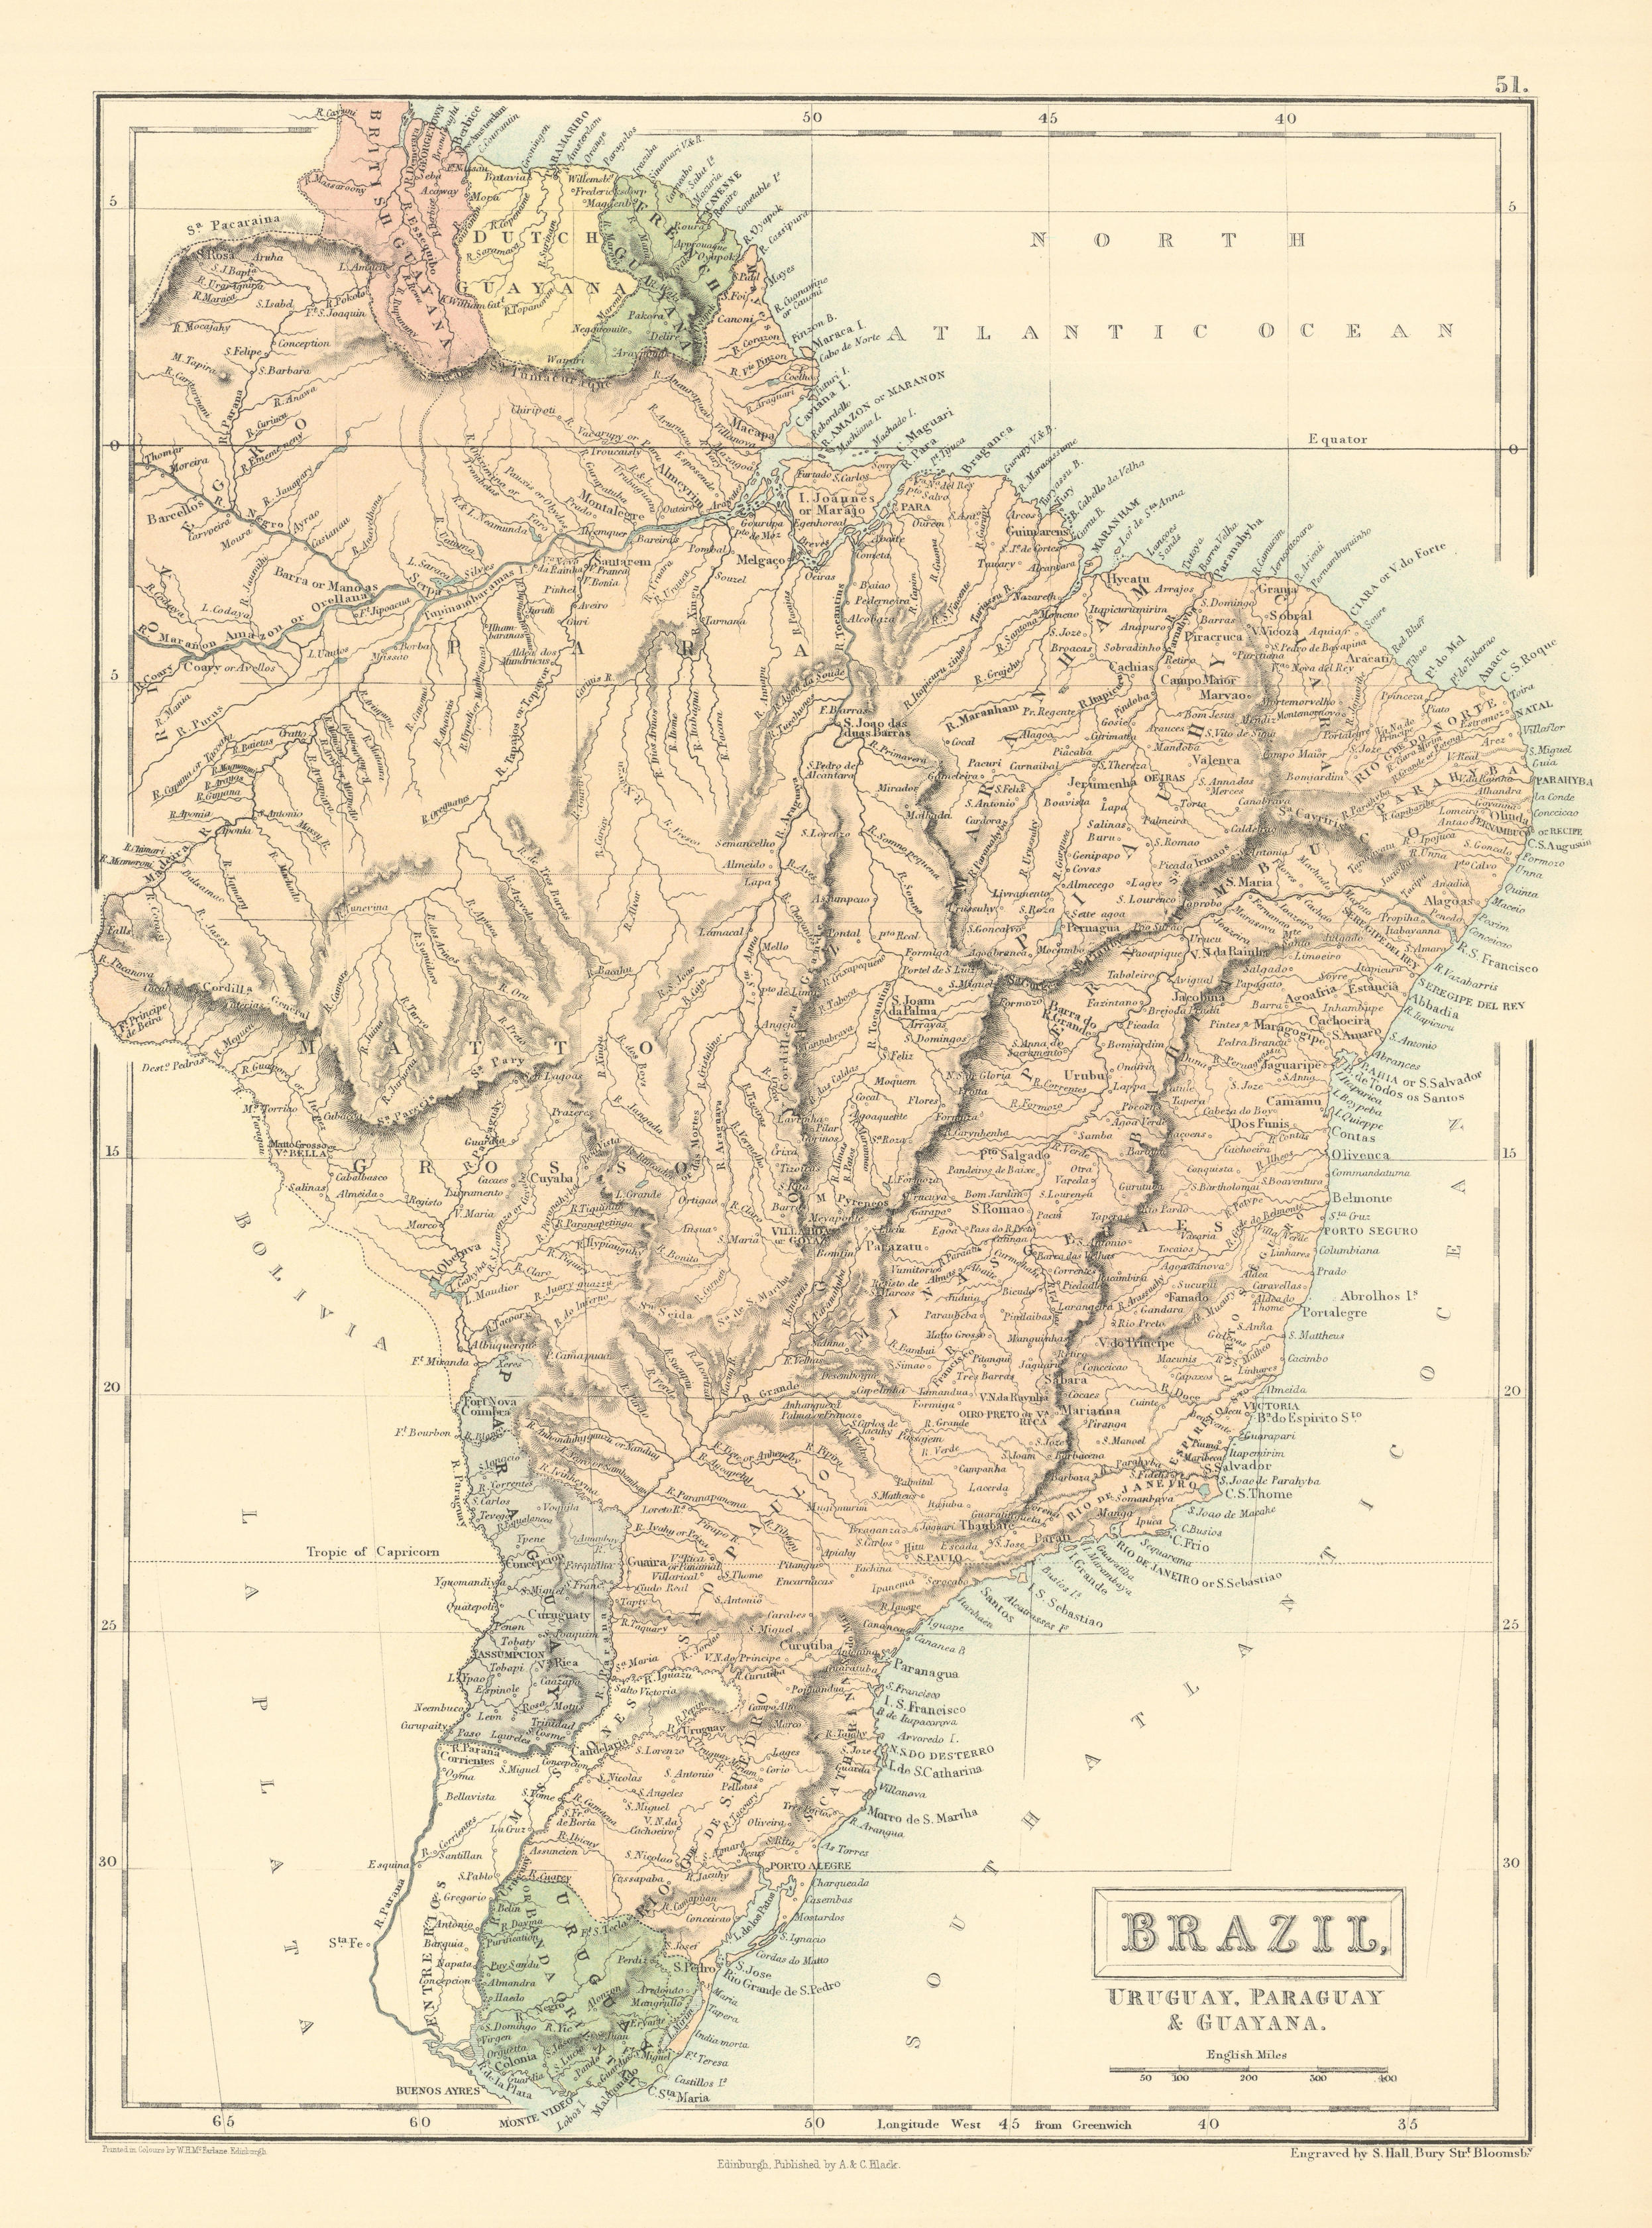 Associate Product Brazil, Uruguay, Paraguay & Guayana. Guyanas. BARTHOLOMEW 1862 old antique map